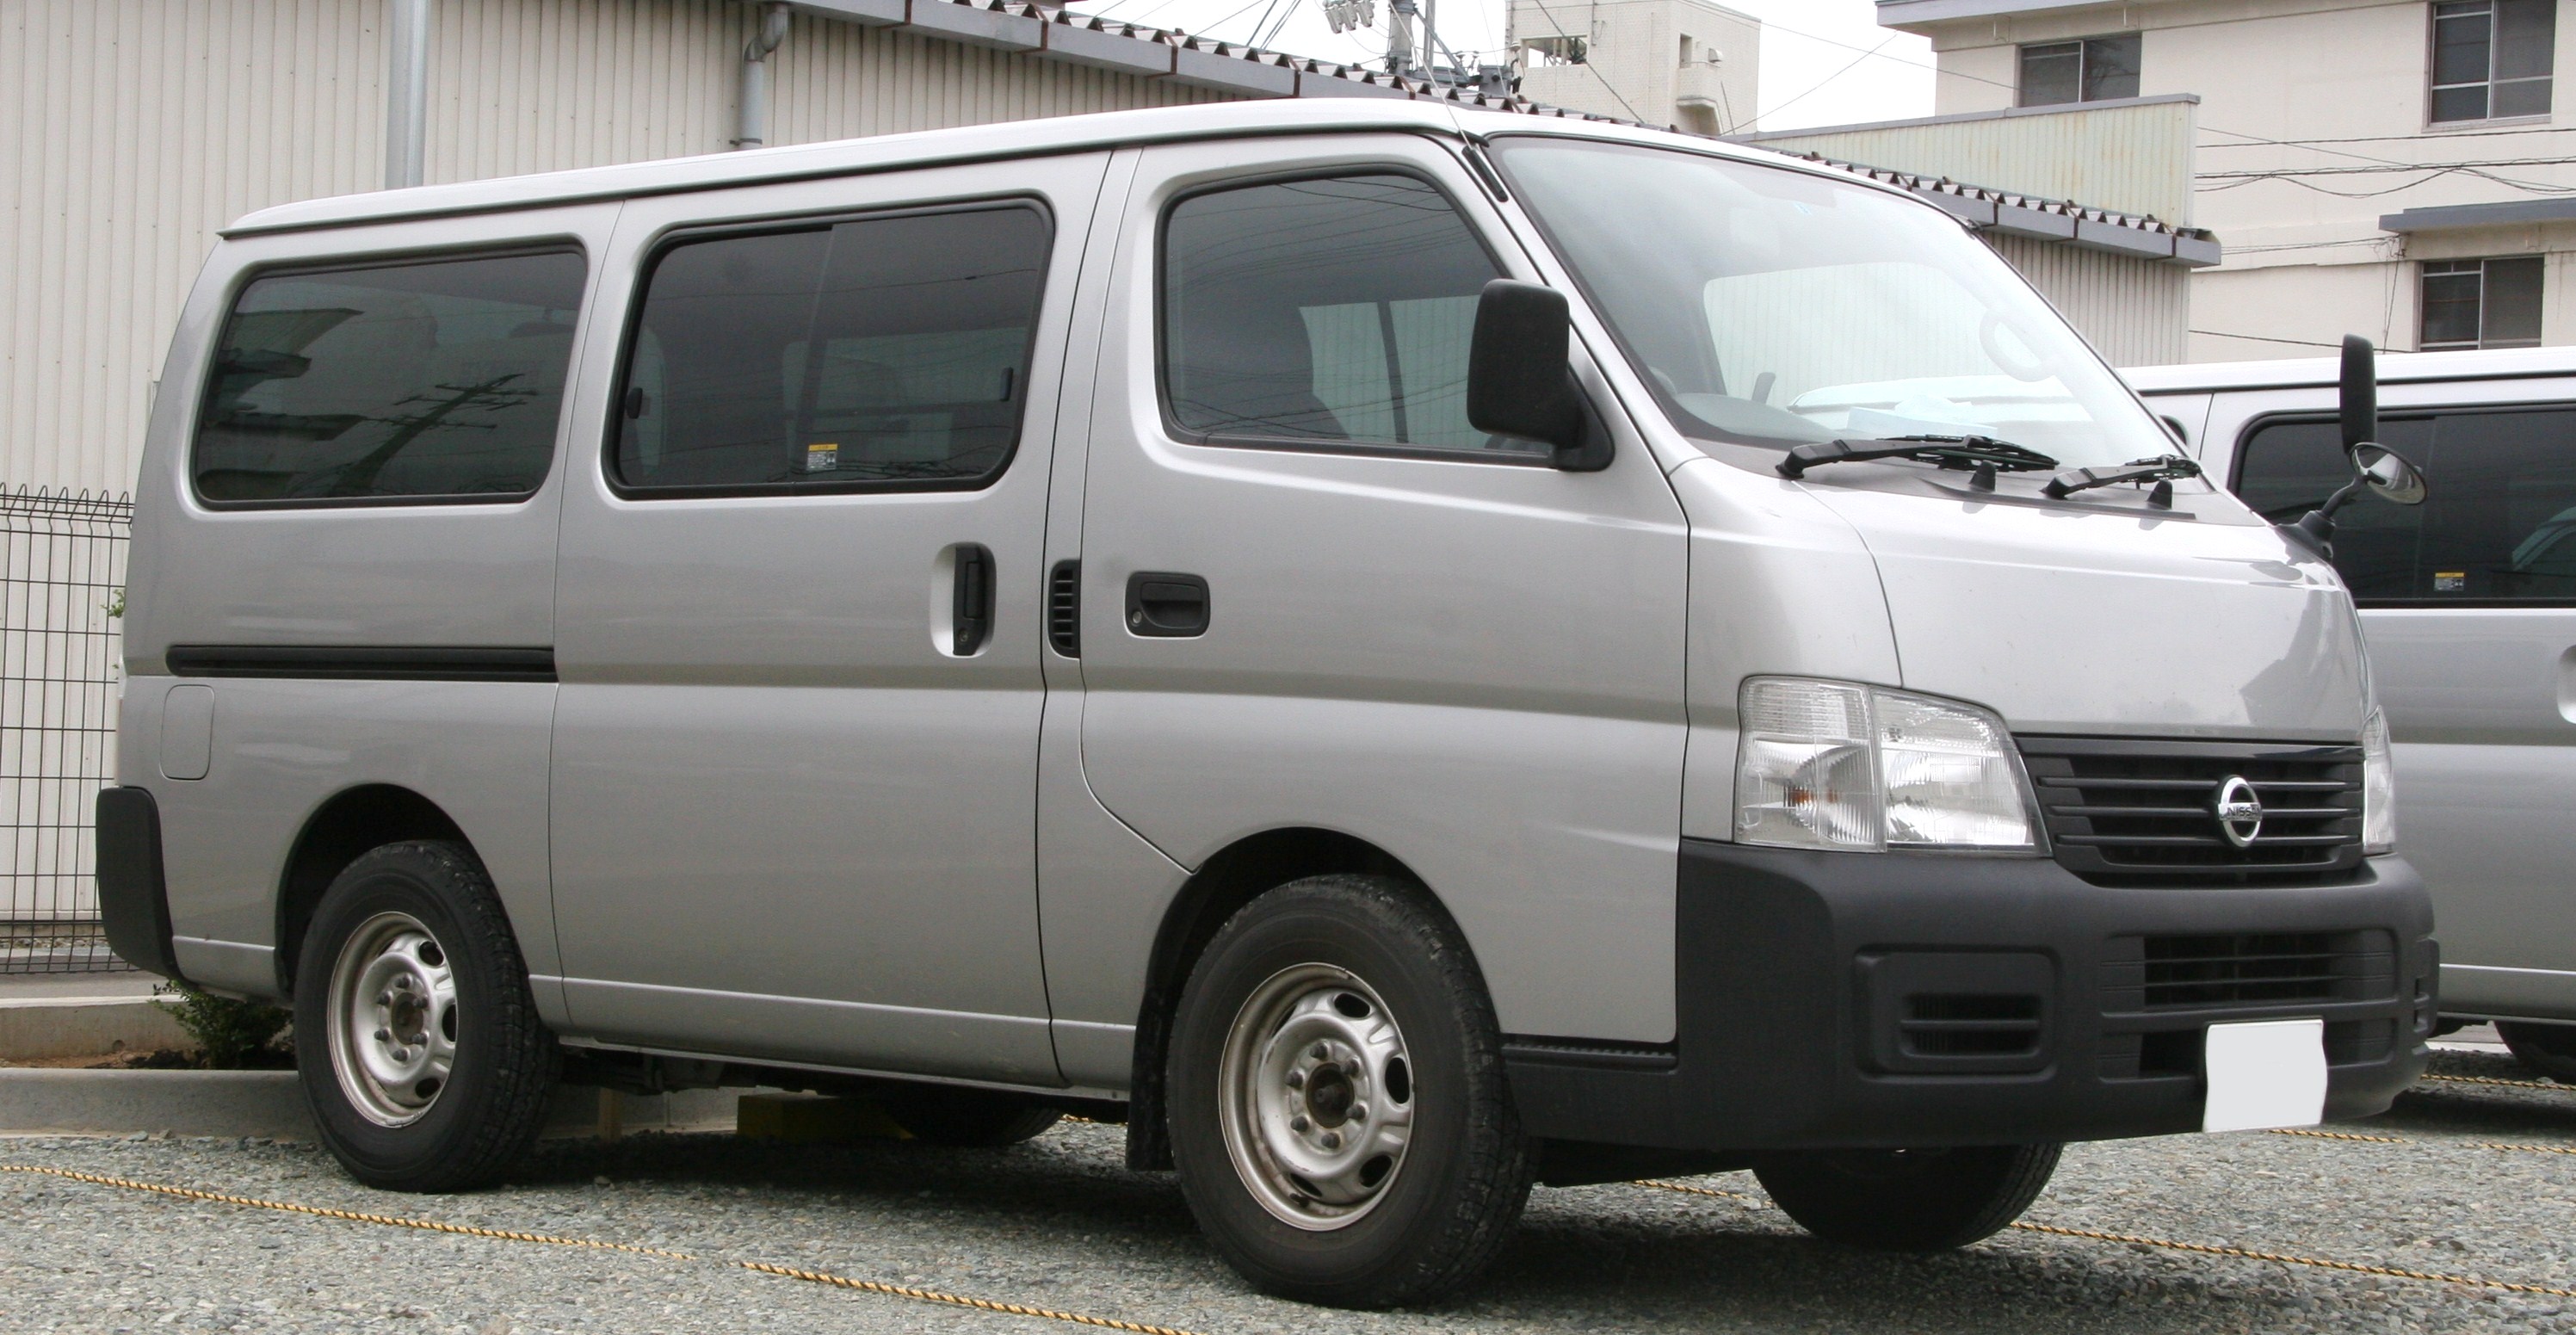 Nissan_caravan_2000_original